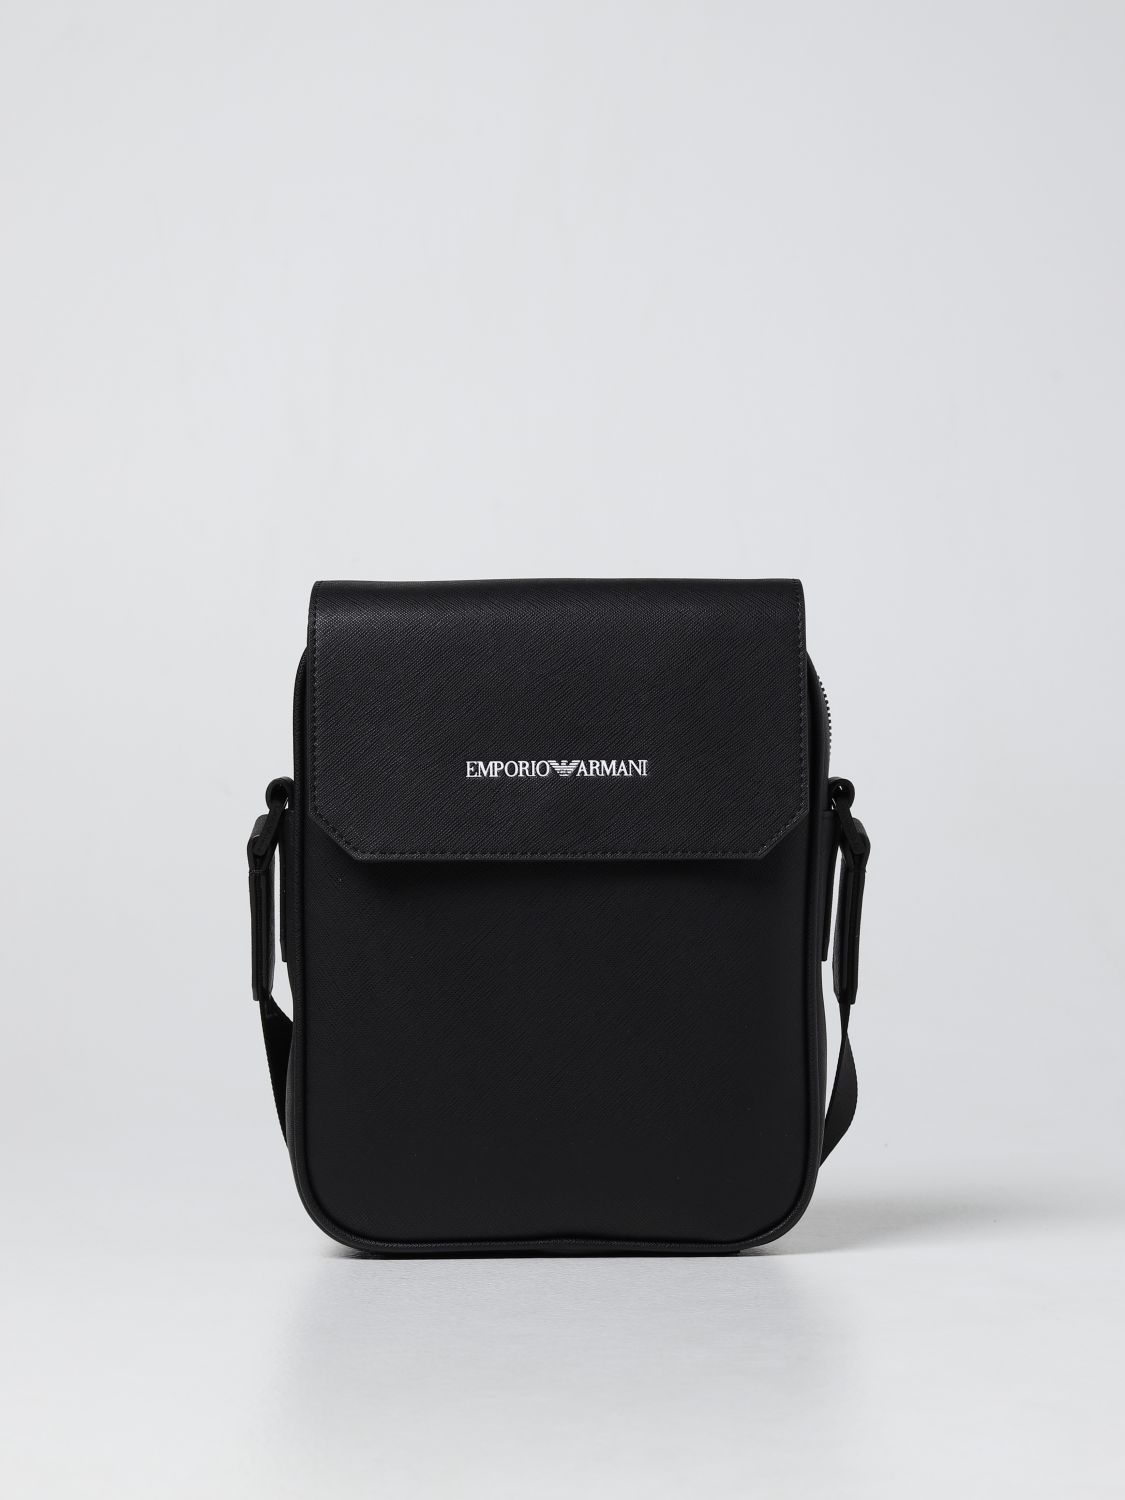 Emporio Armani Messenger Bag In Regenerated Leather Black Emporio Armani Shoulder Bag